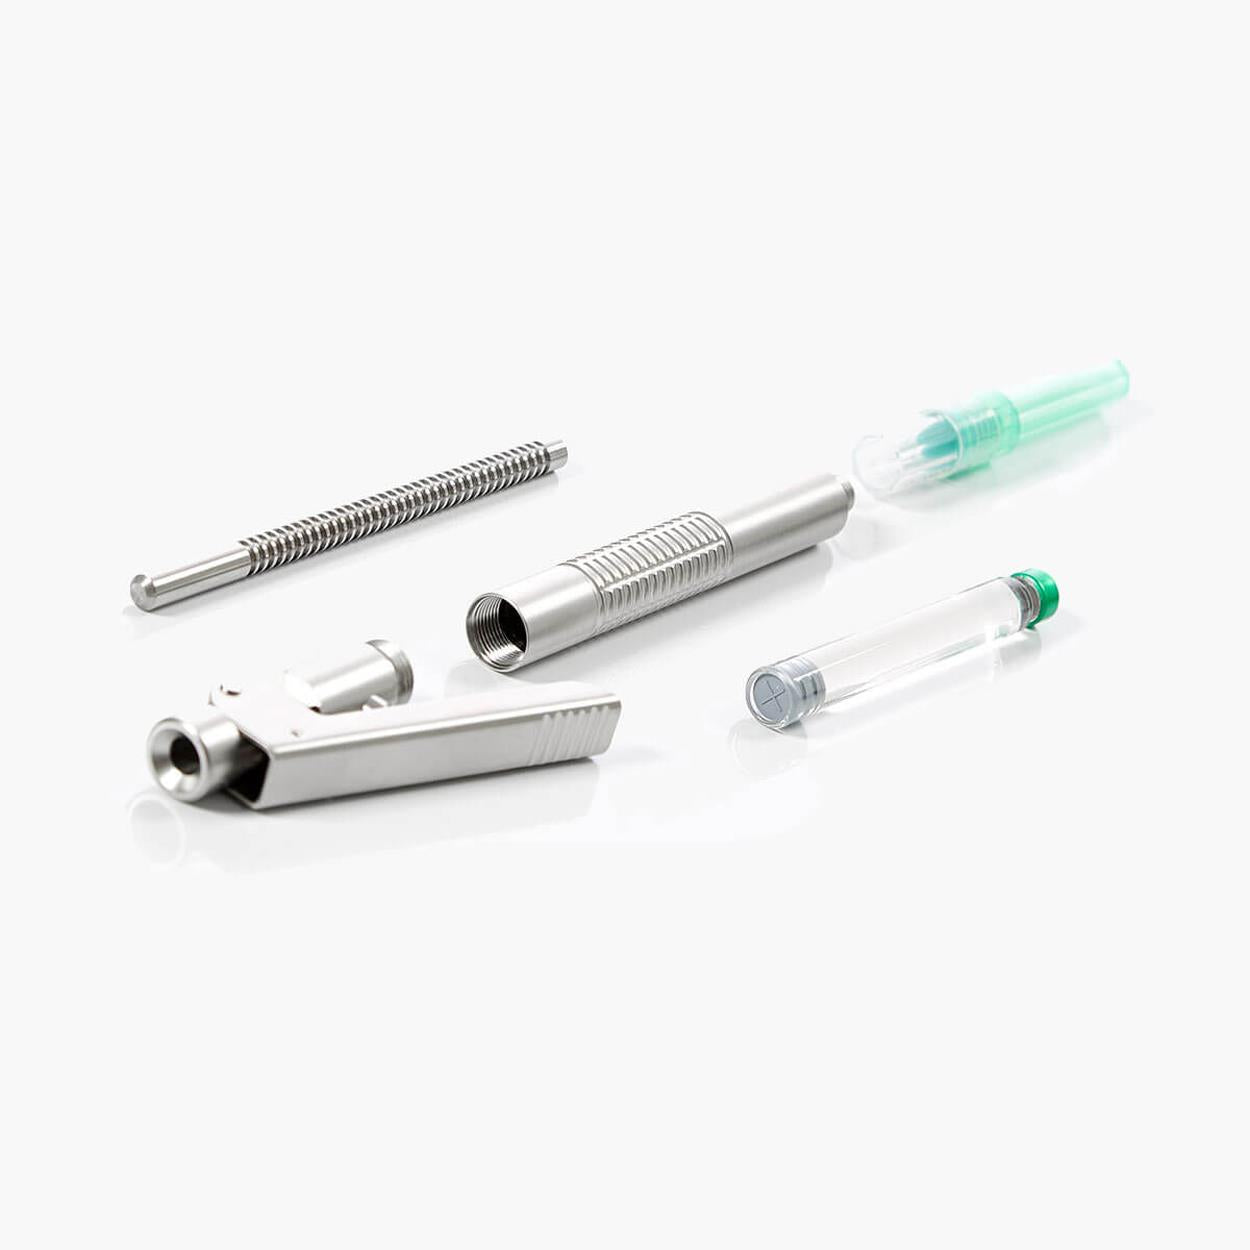 DentrealStore - Ronvig Paroject-Dental cartridge syringe for intraligamental local anaesthesia (PDLA).